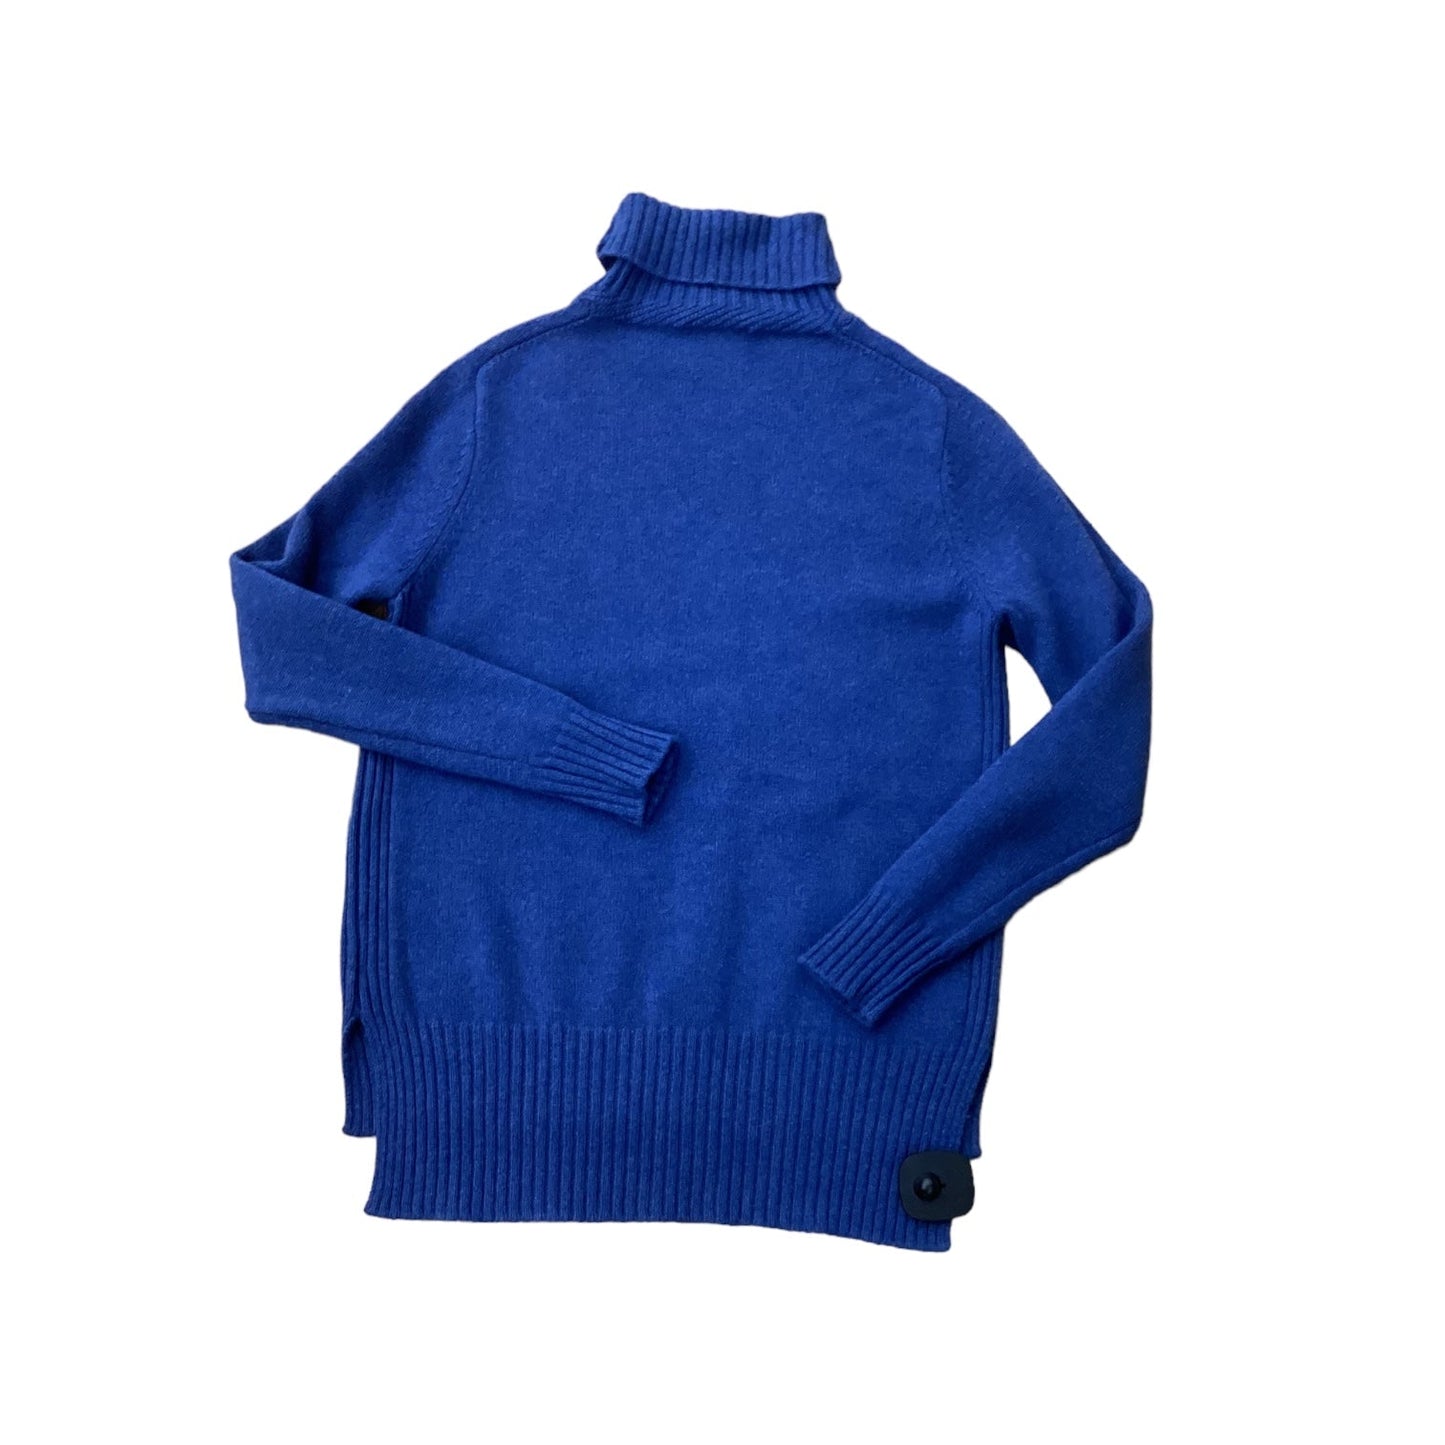 Sweater Designer By Cma  Size: M